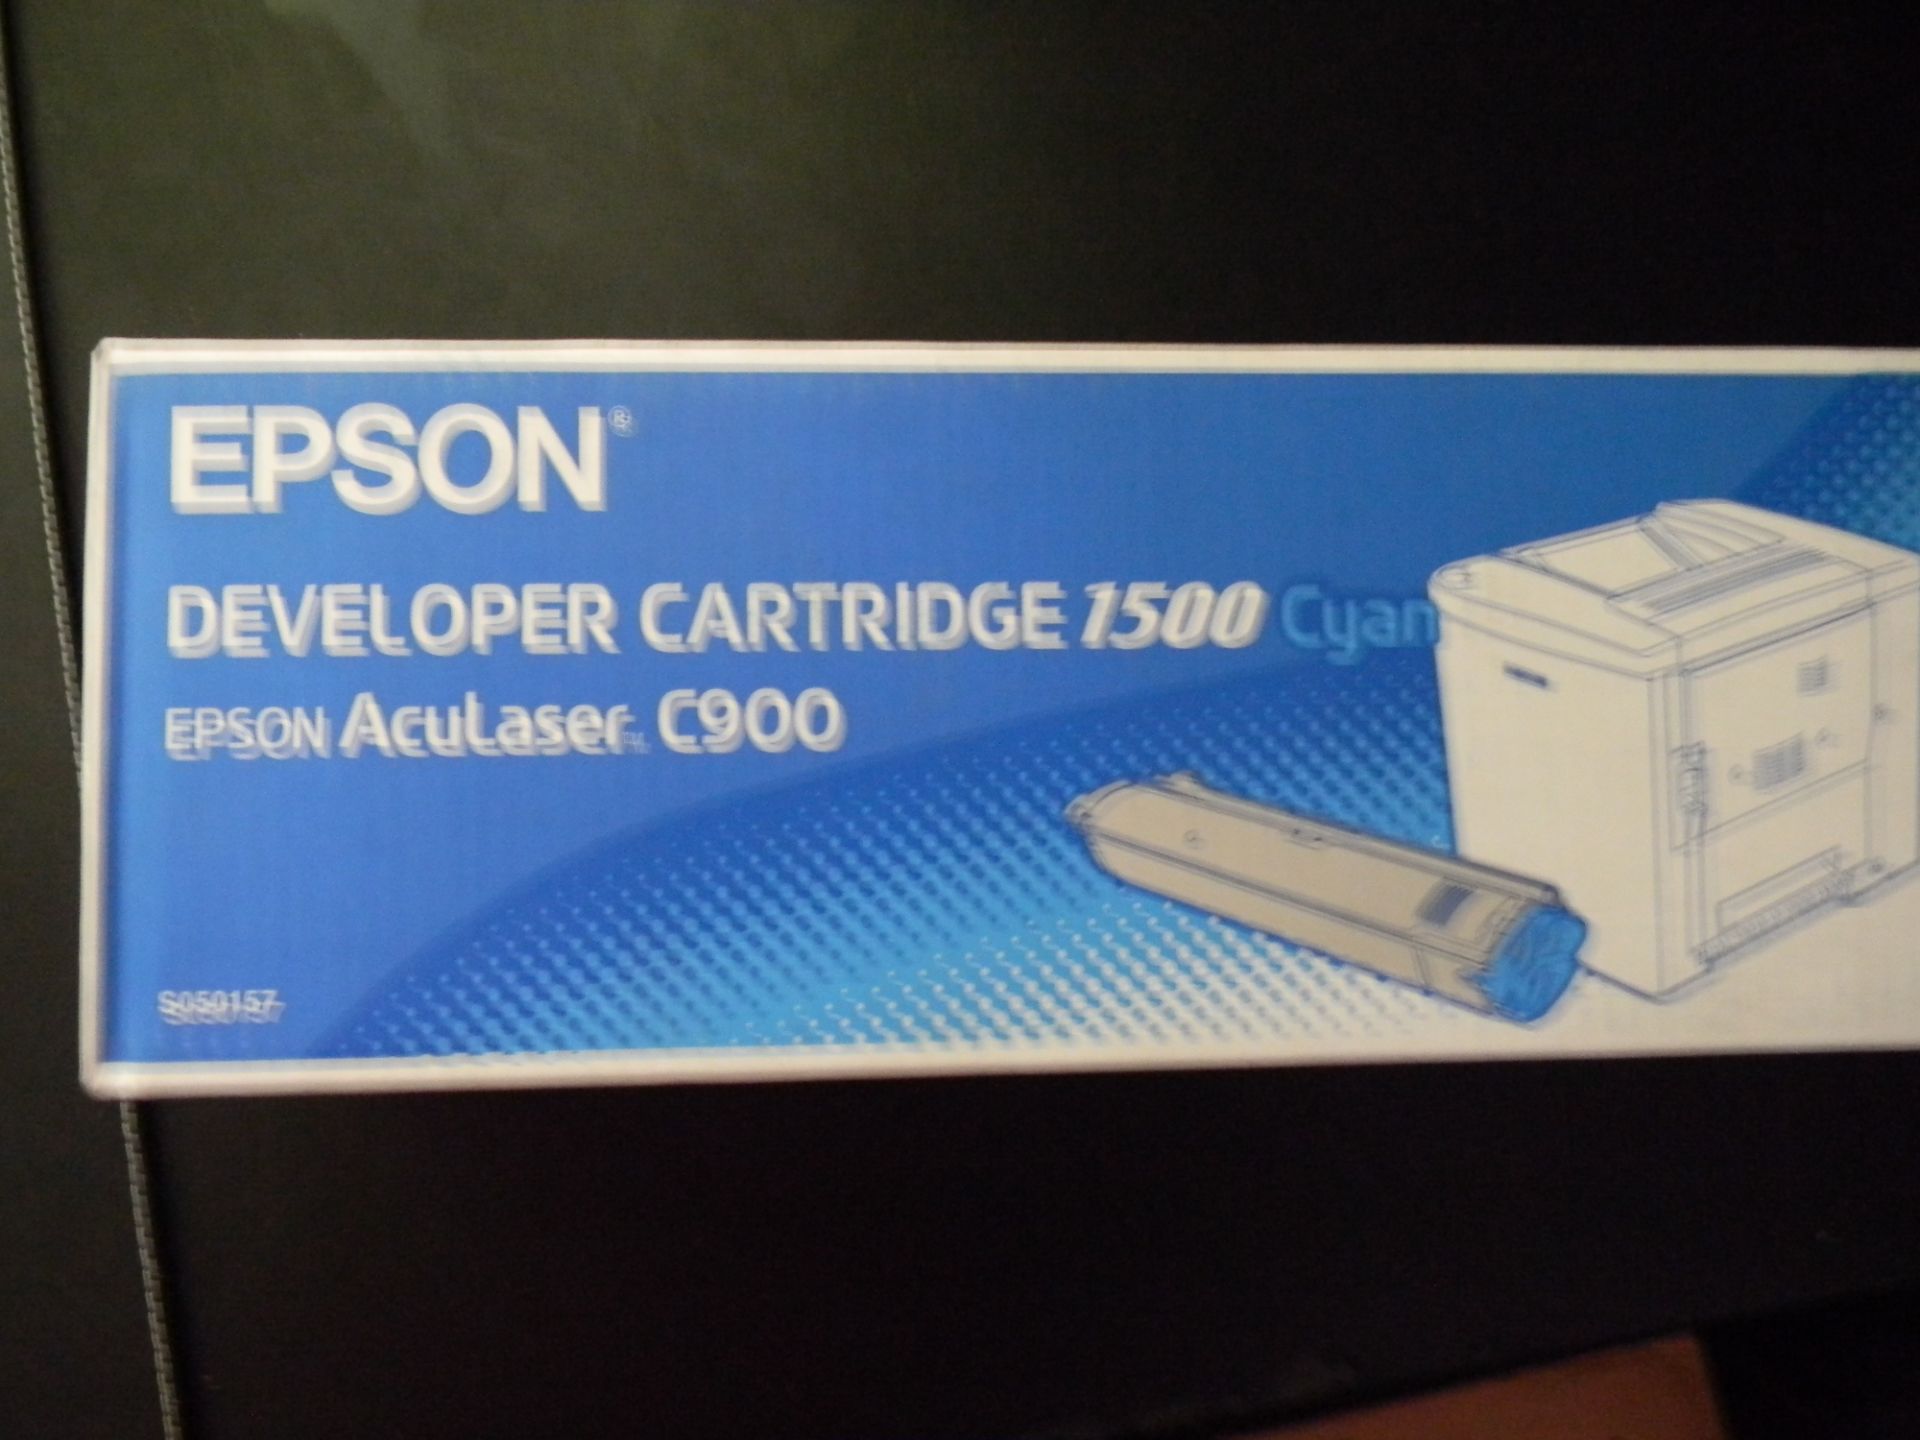 2 x Epson Developer Cartridge 1500 Cyan - Image 2 of 2